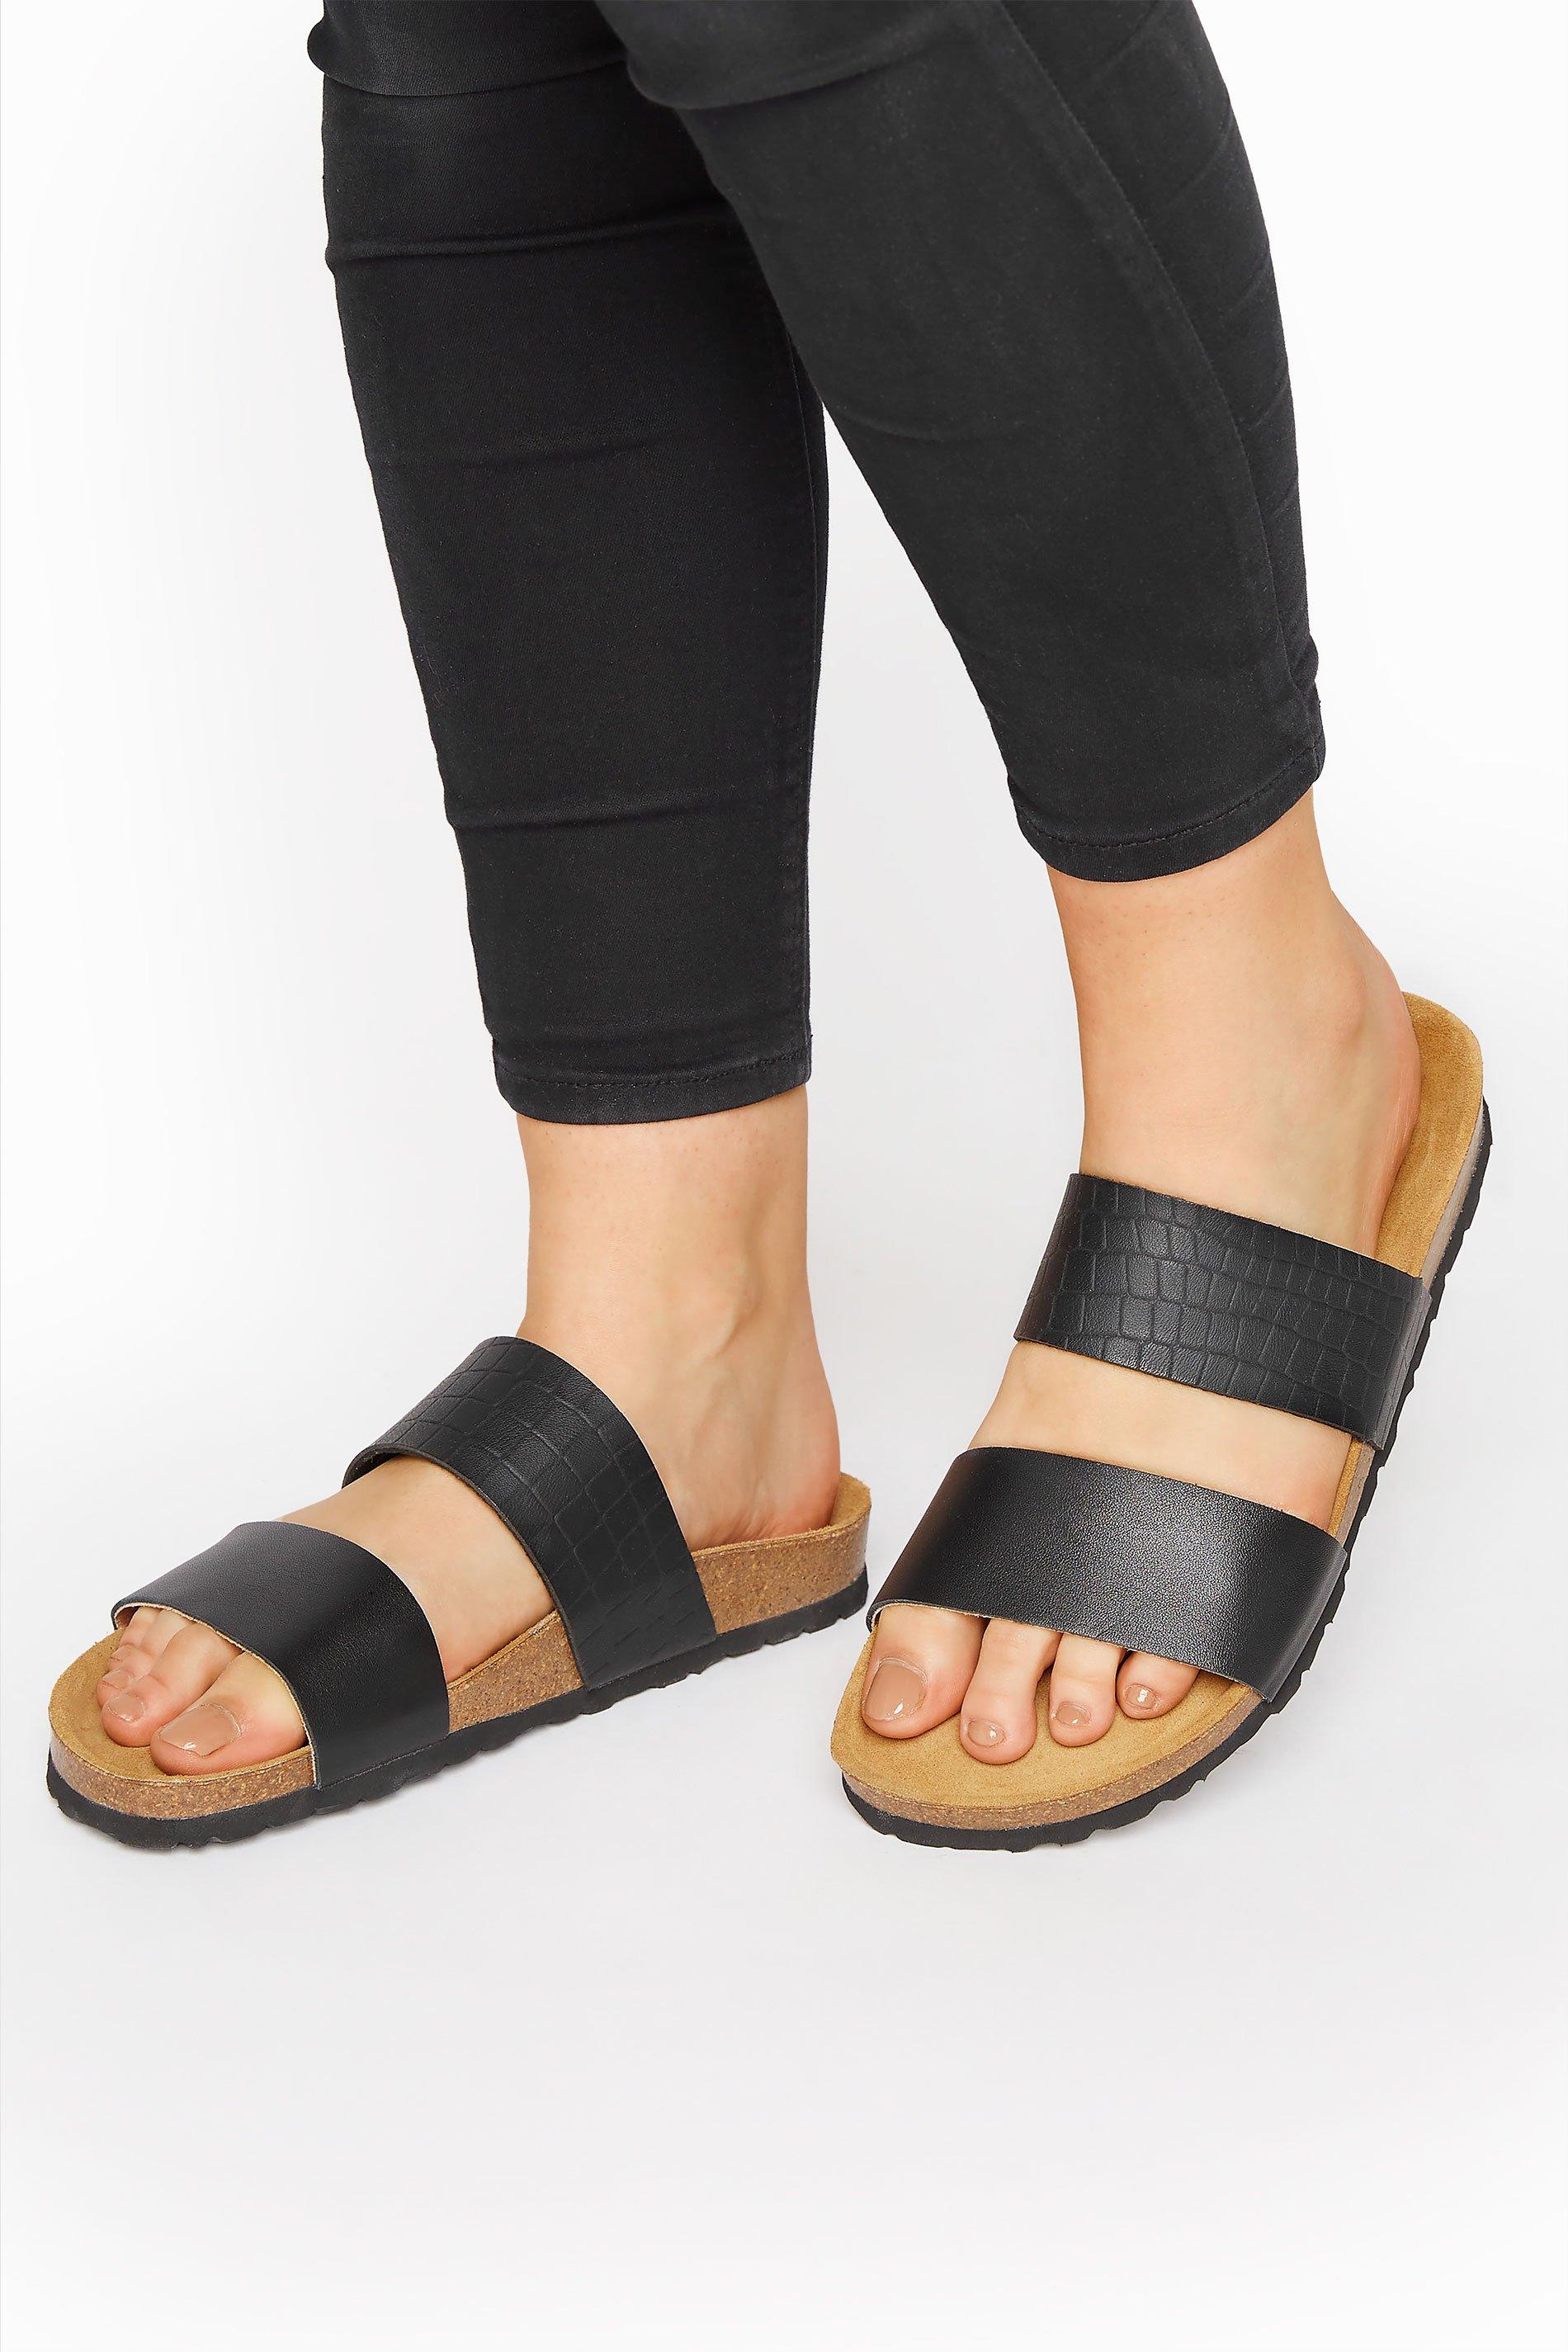 Ex Dorothy Perkins Two Buckle Strap Beach/ Summer Sandals Sliders